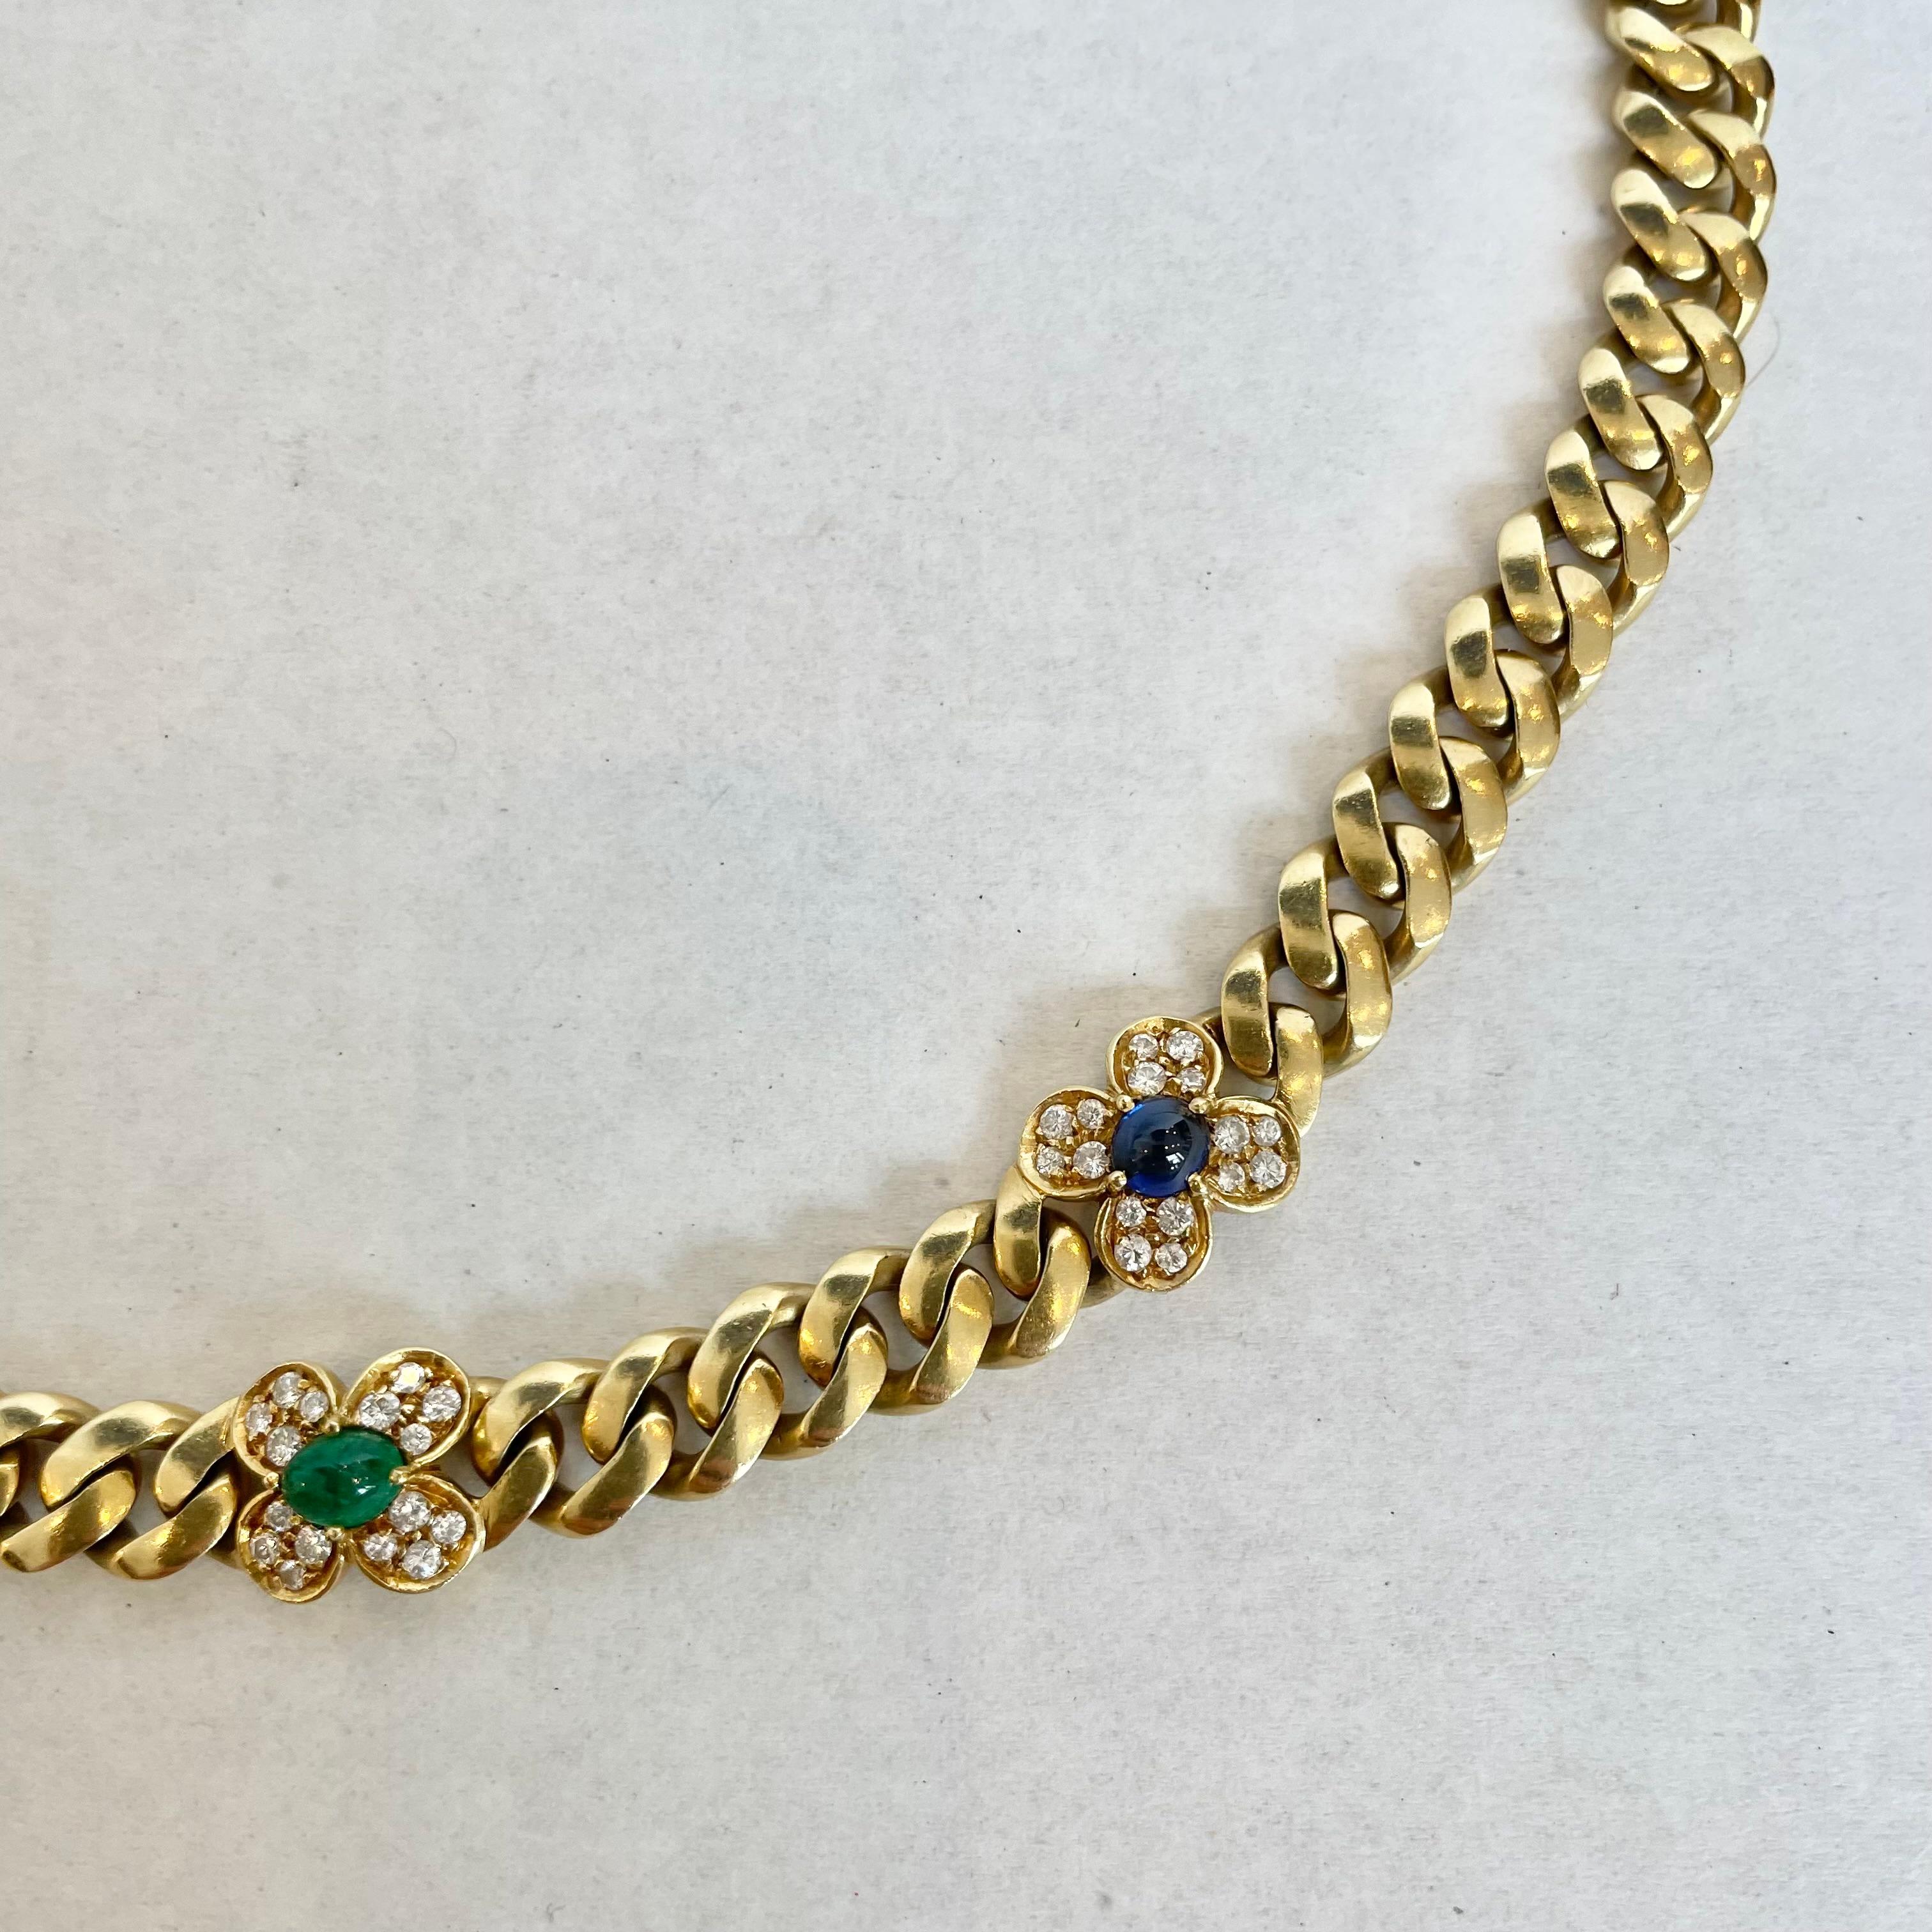 Mid-Century Modern Bvlgari Gold, Gem-Set and Diamond Necklace, 1970s Italy